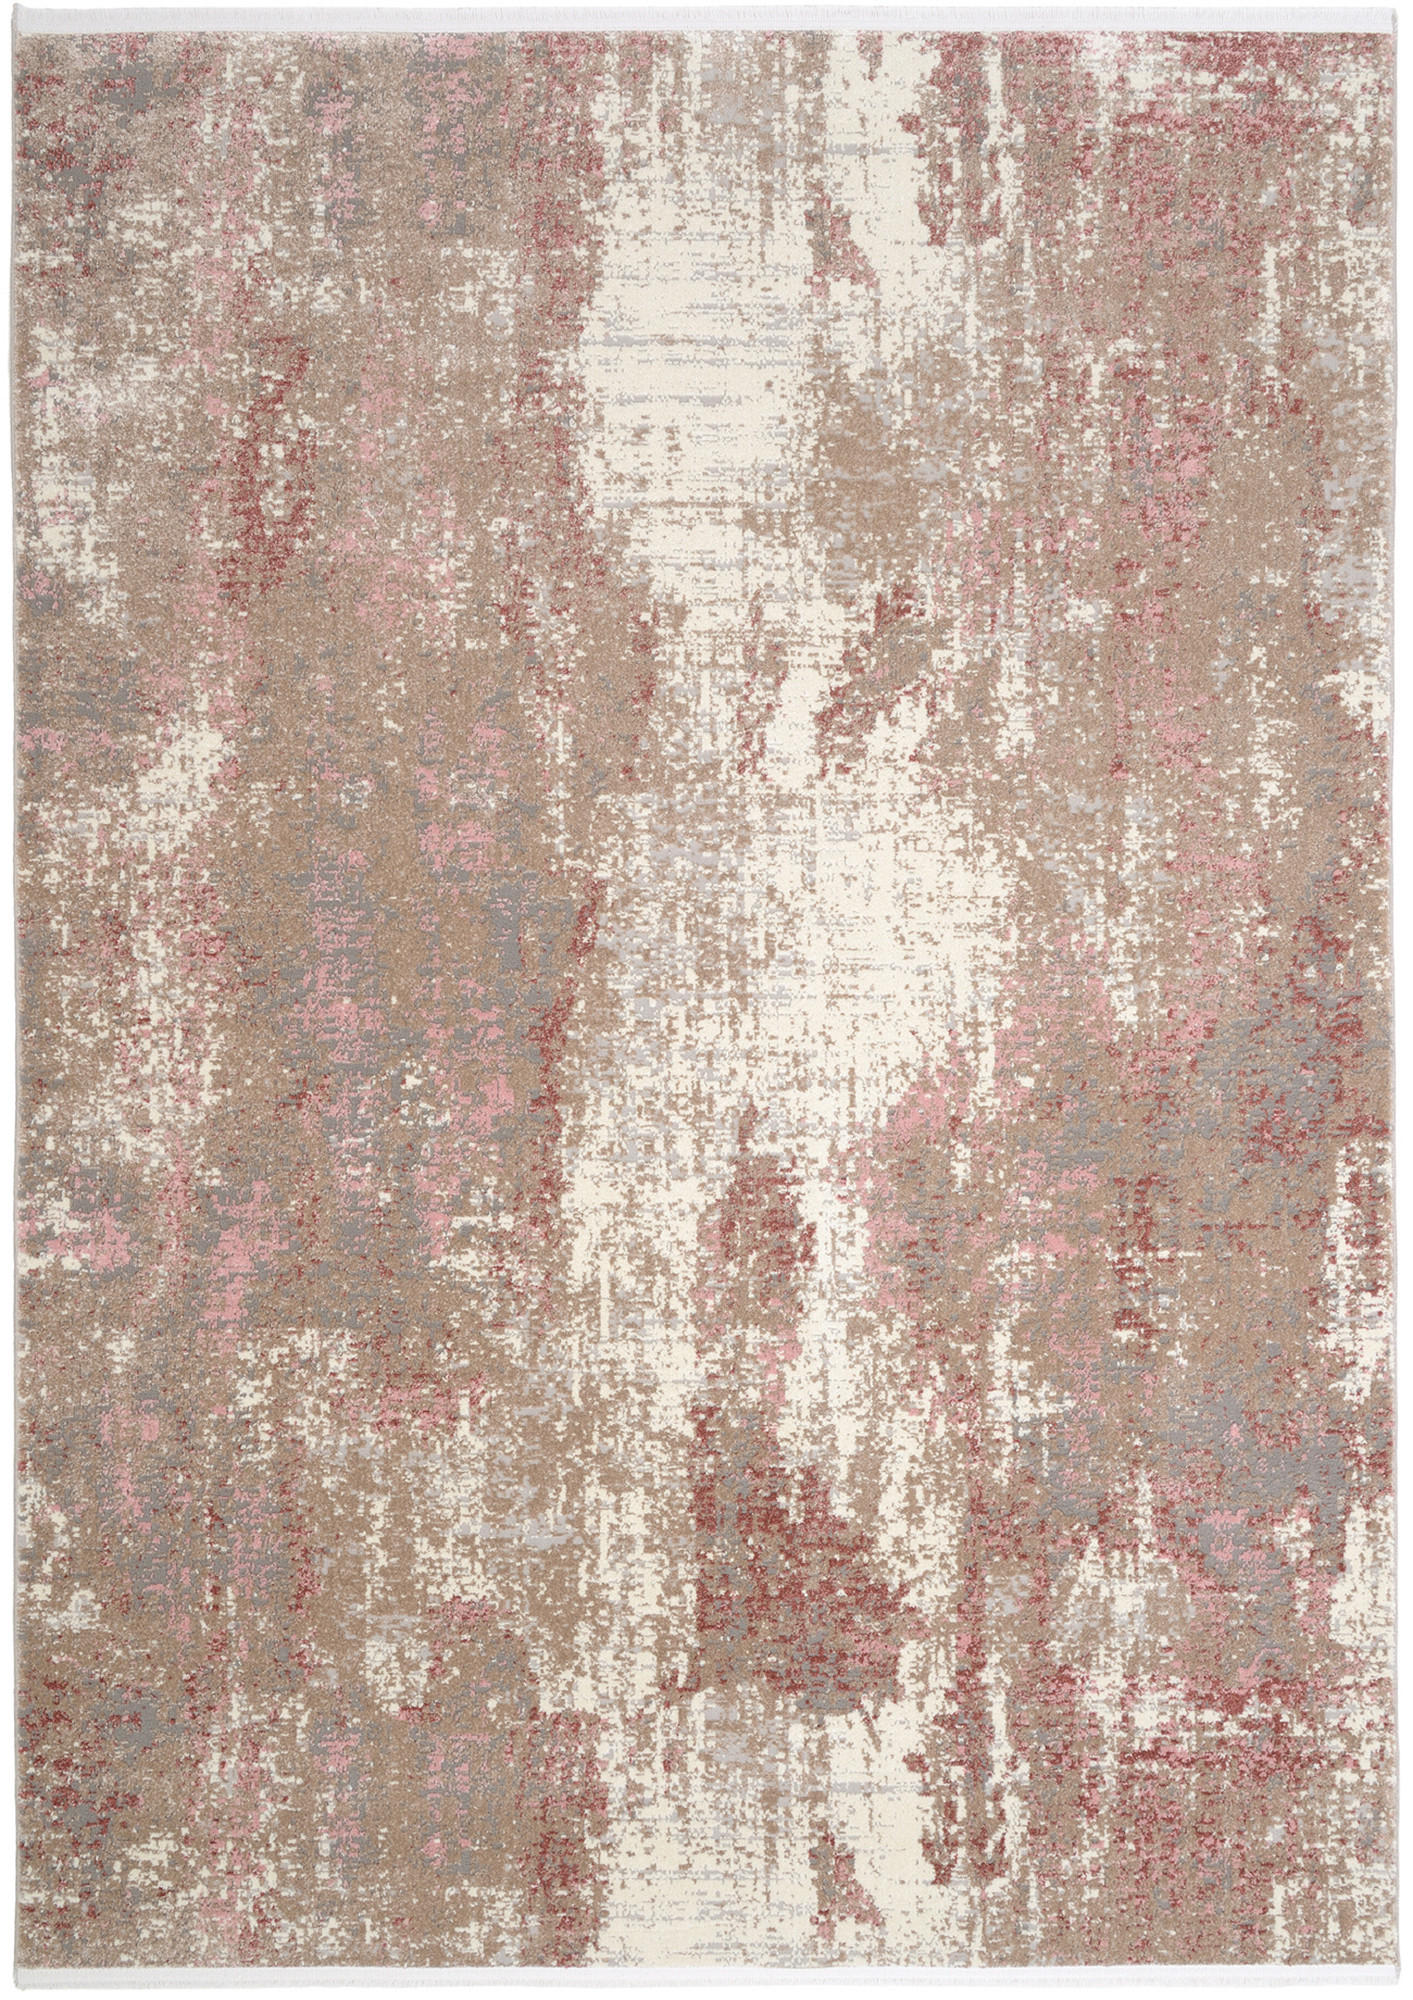 TEPPICH 200/250 cm  - Rot, Design, Textil (200/250cm) - Novel